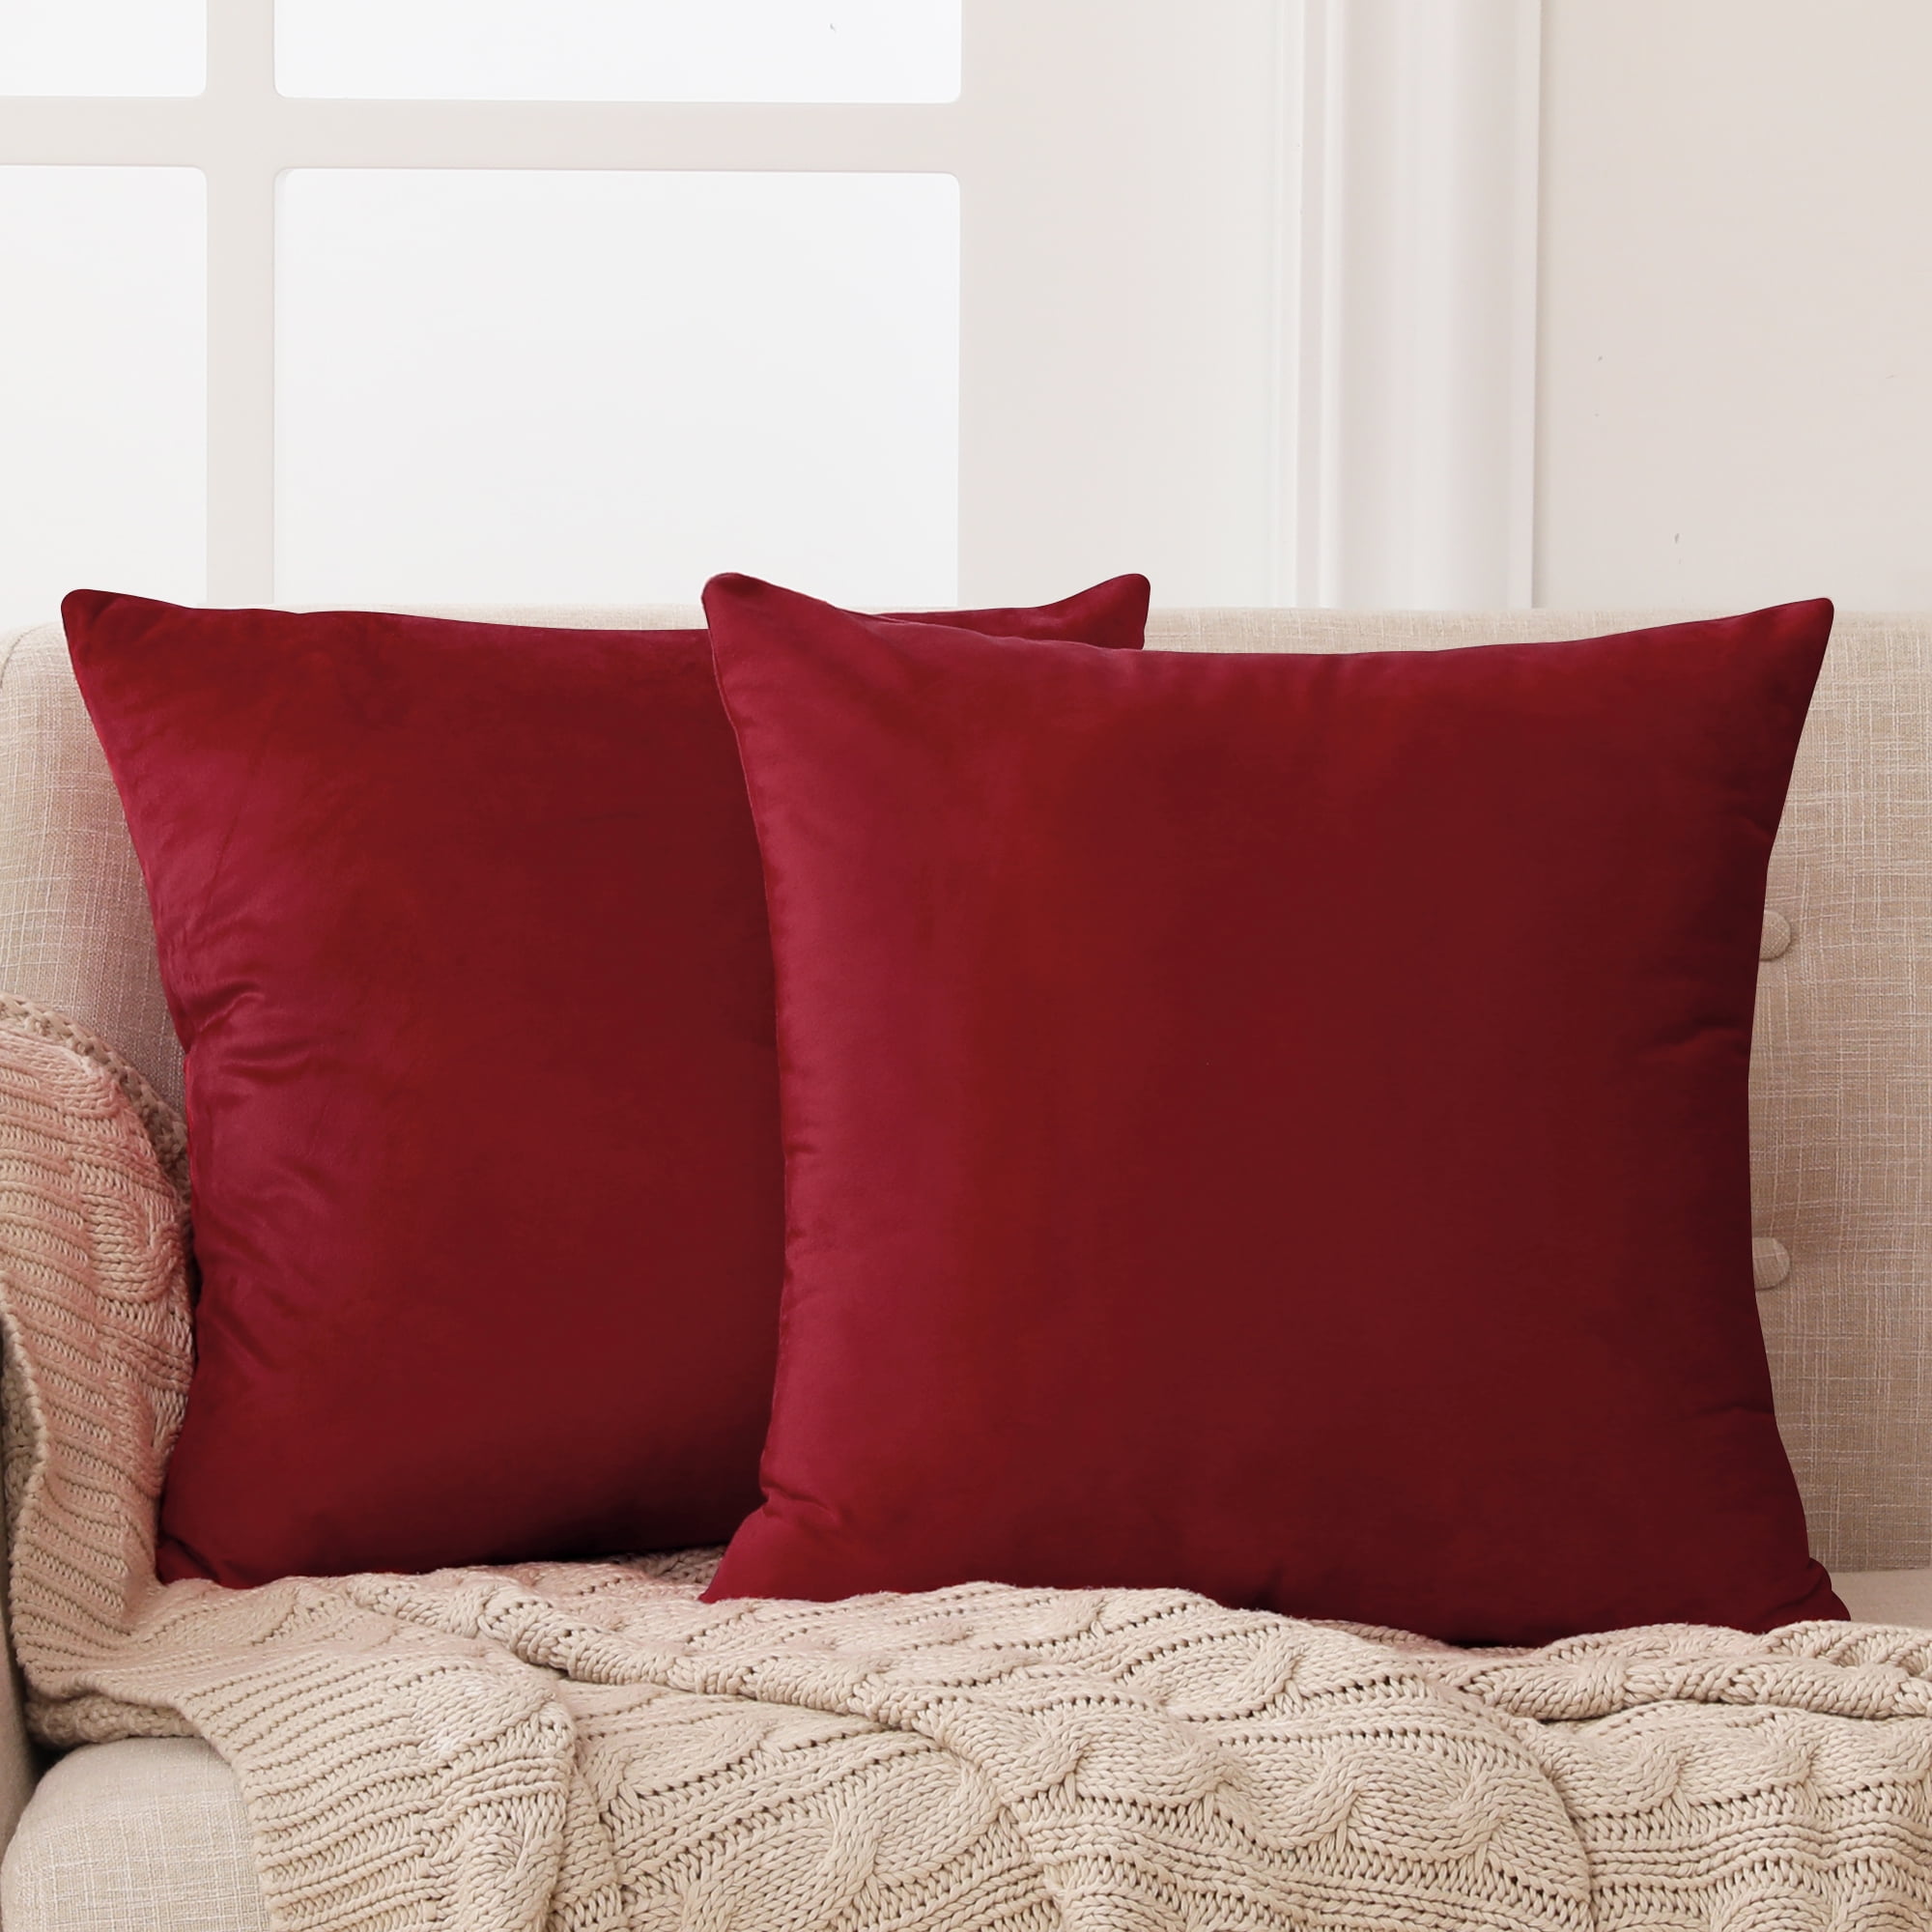 Red Velvet Throw Pillow Cover, Red Throw Pillows, Red Pillow Cover, Red  Pillows, Red Sofa Pillows, Red Accent Pillows, Red Pillows 18x18 